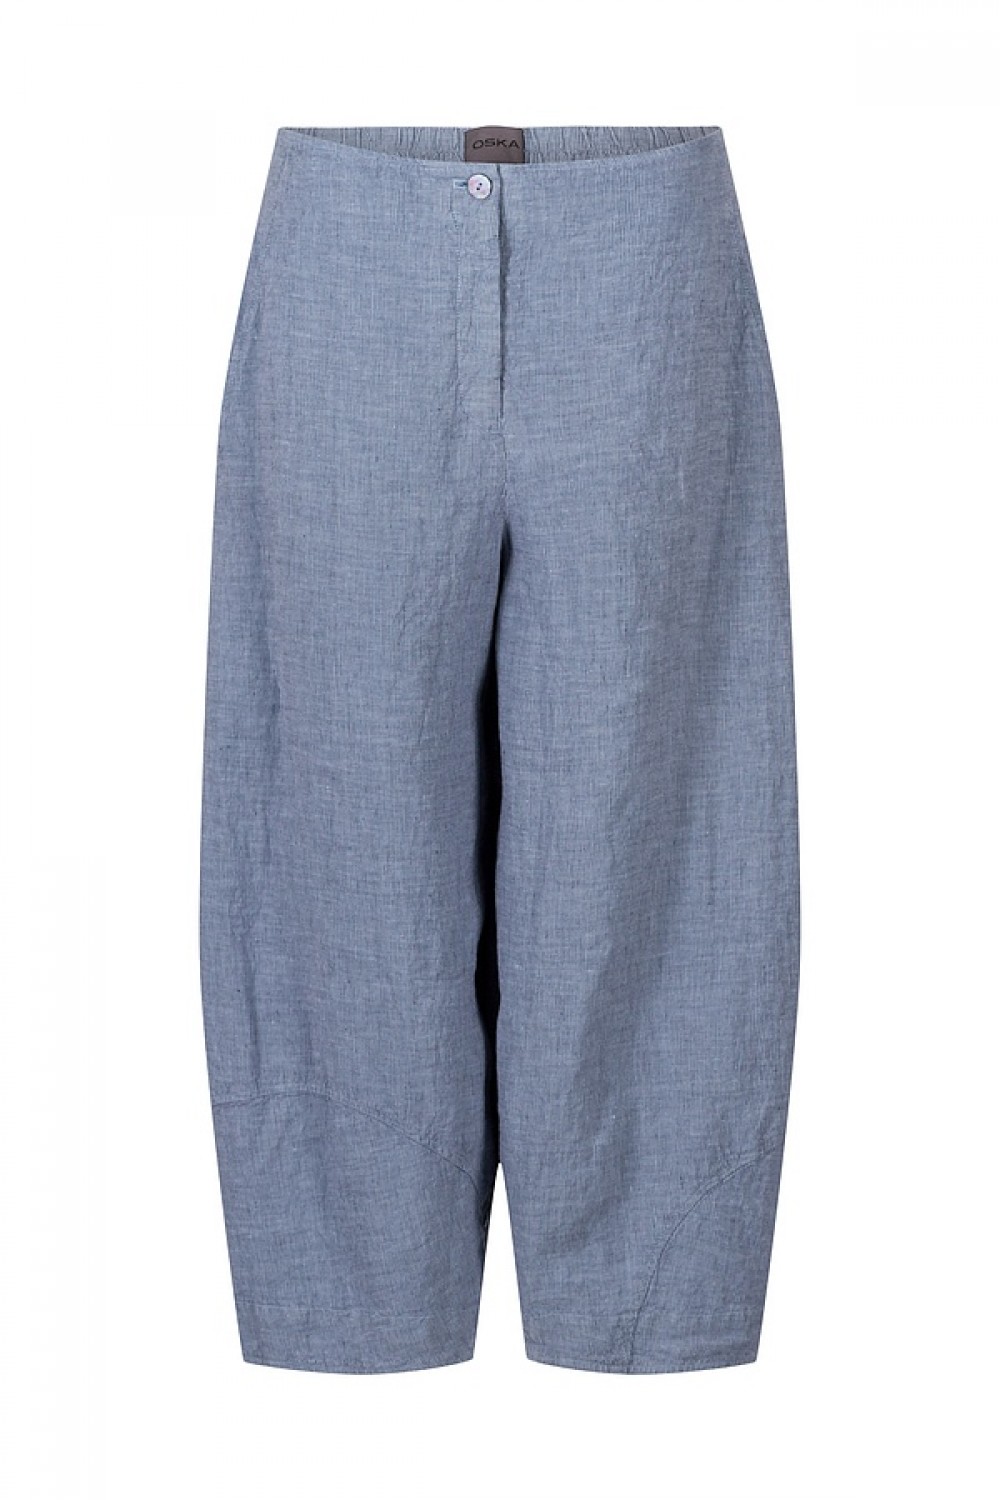 OSKA Trousers Veranti 431 Air / 100 % Linen